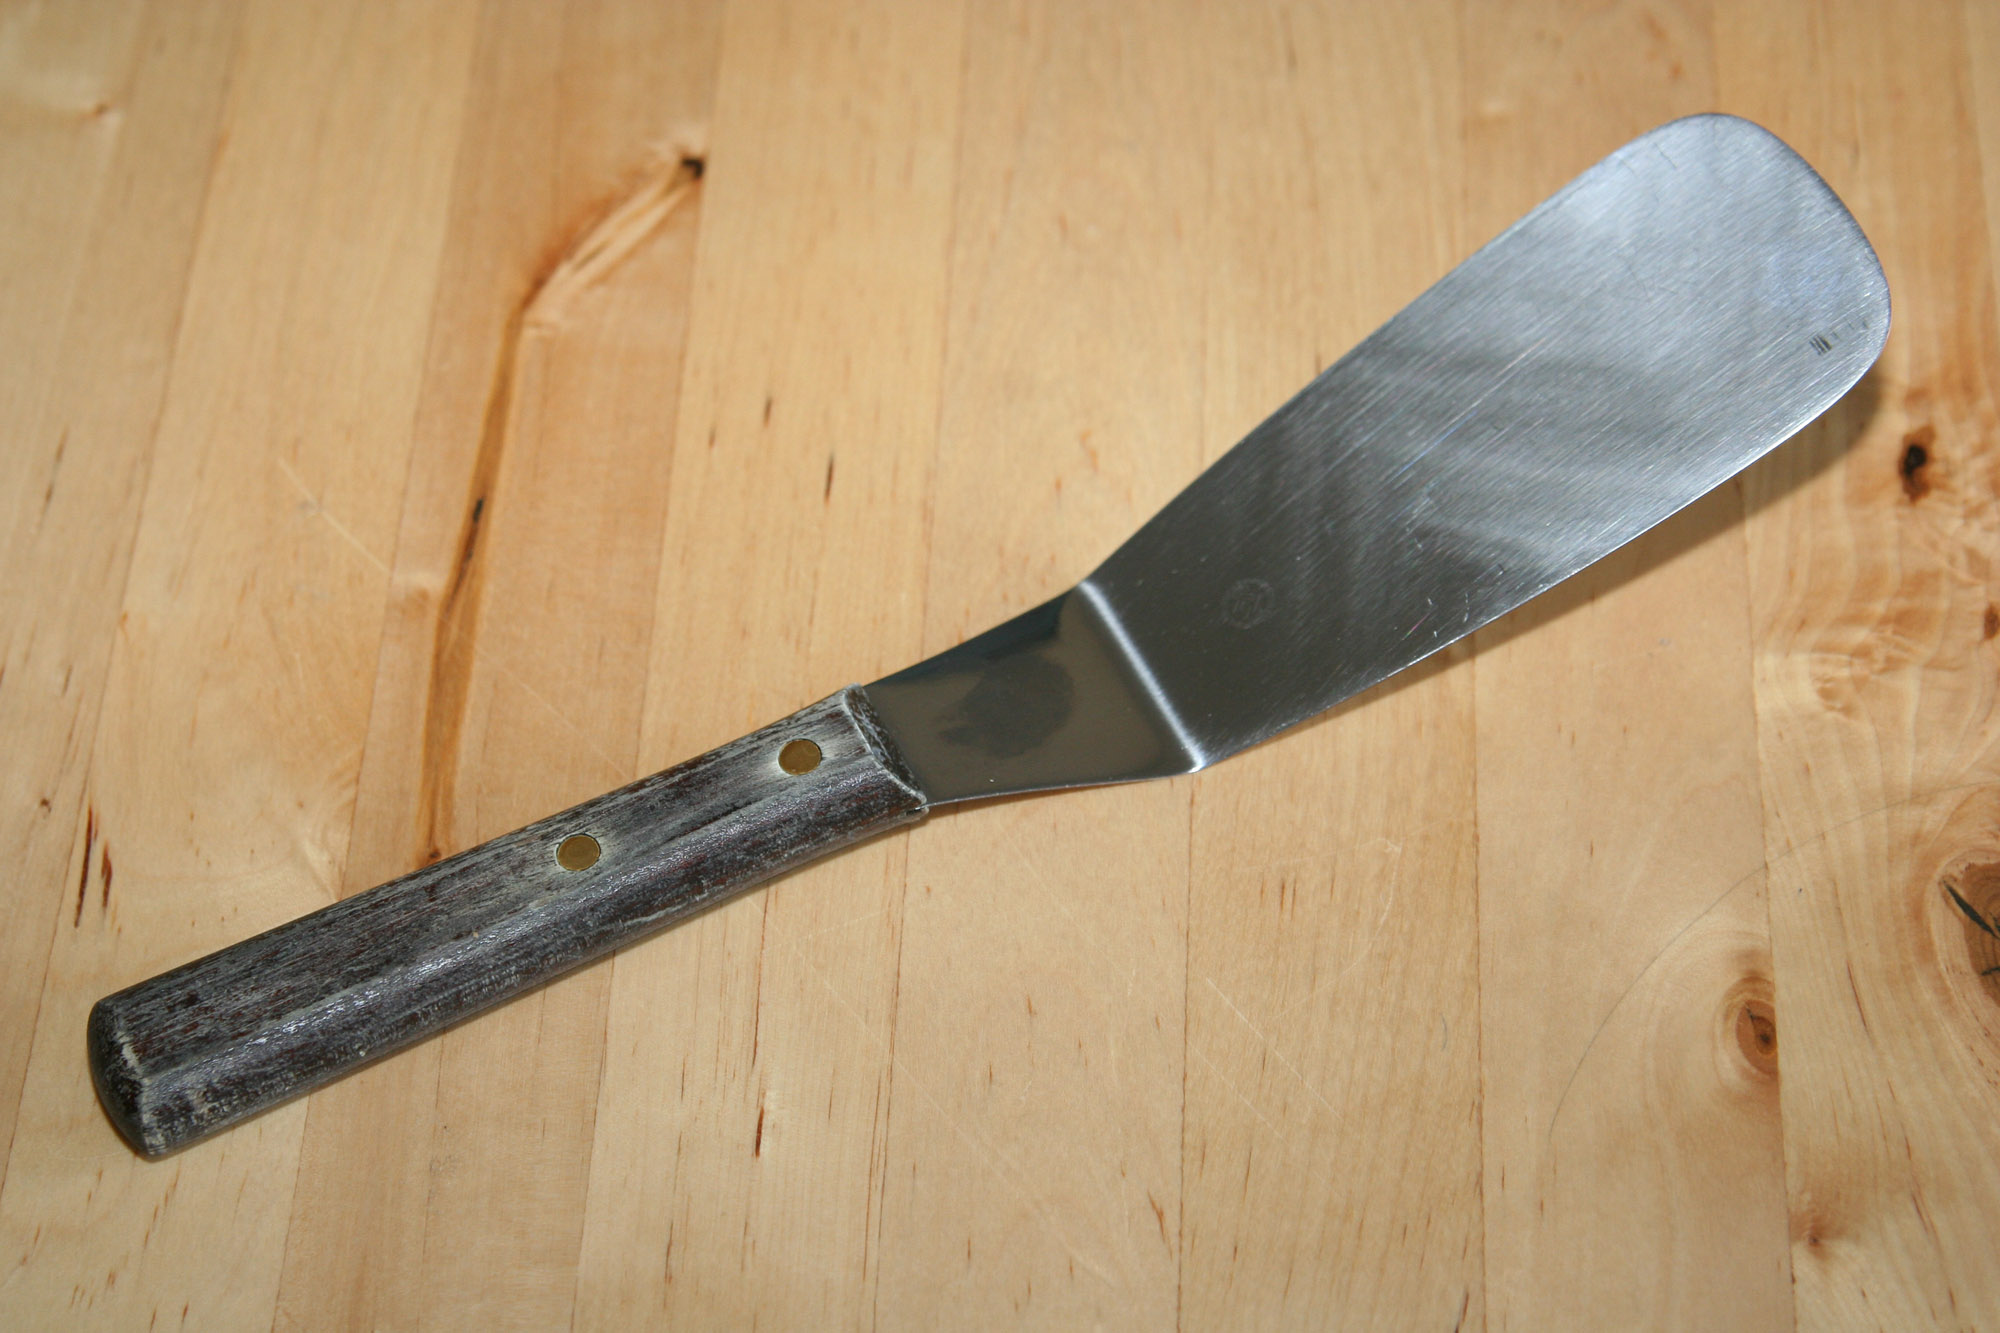 File:Frosting spatula.jpg - Wikipedia